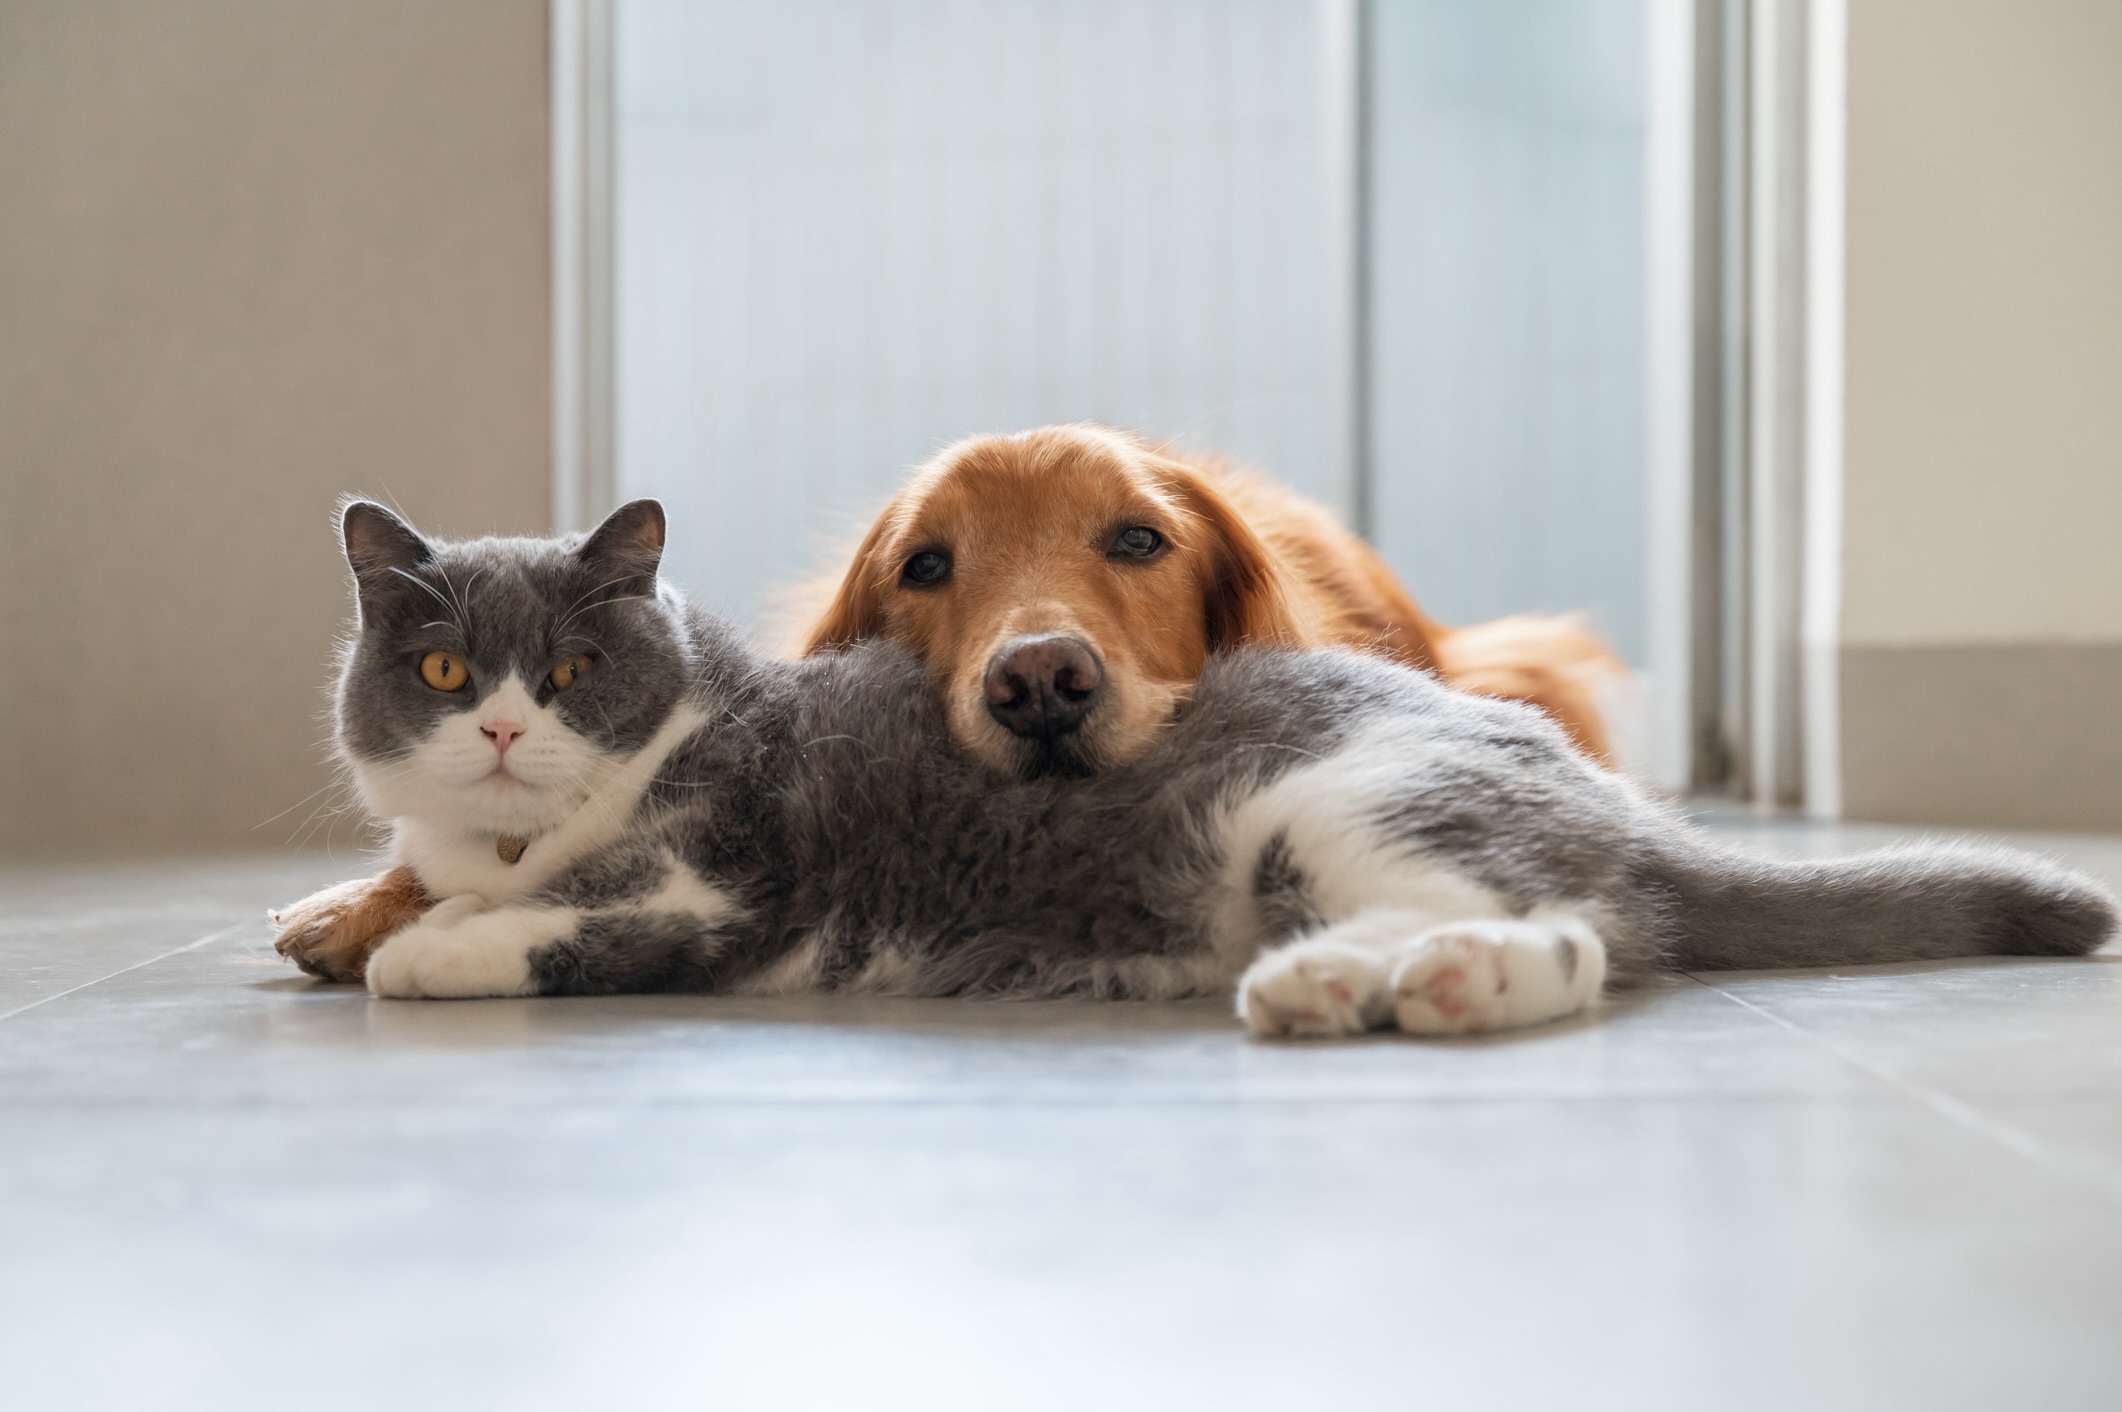 British Shorthair cat and Golden Retriever snuggle on floor